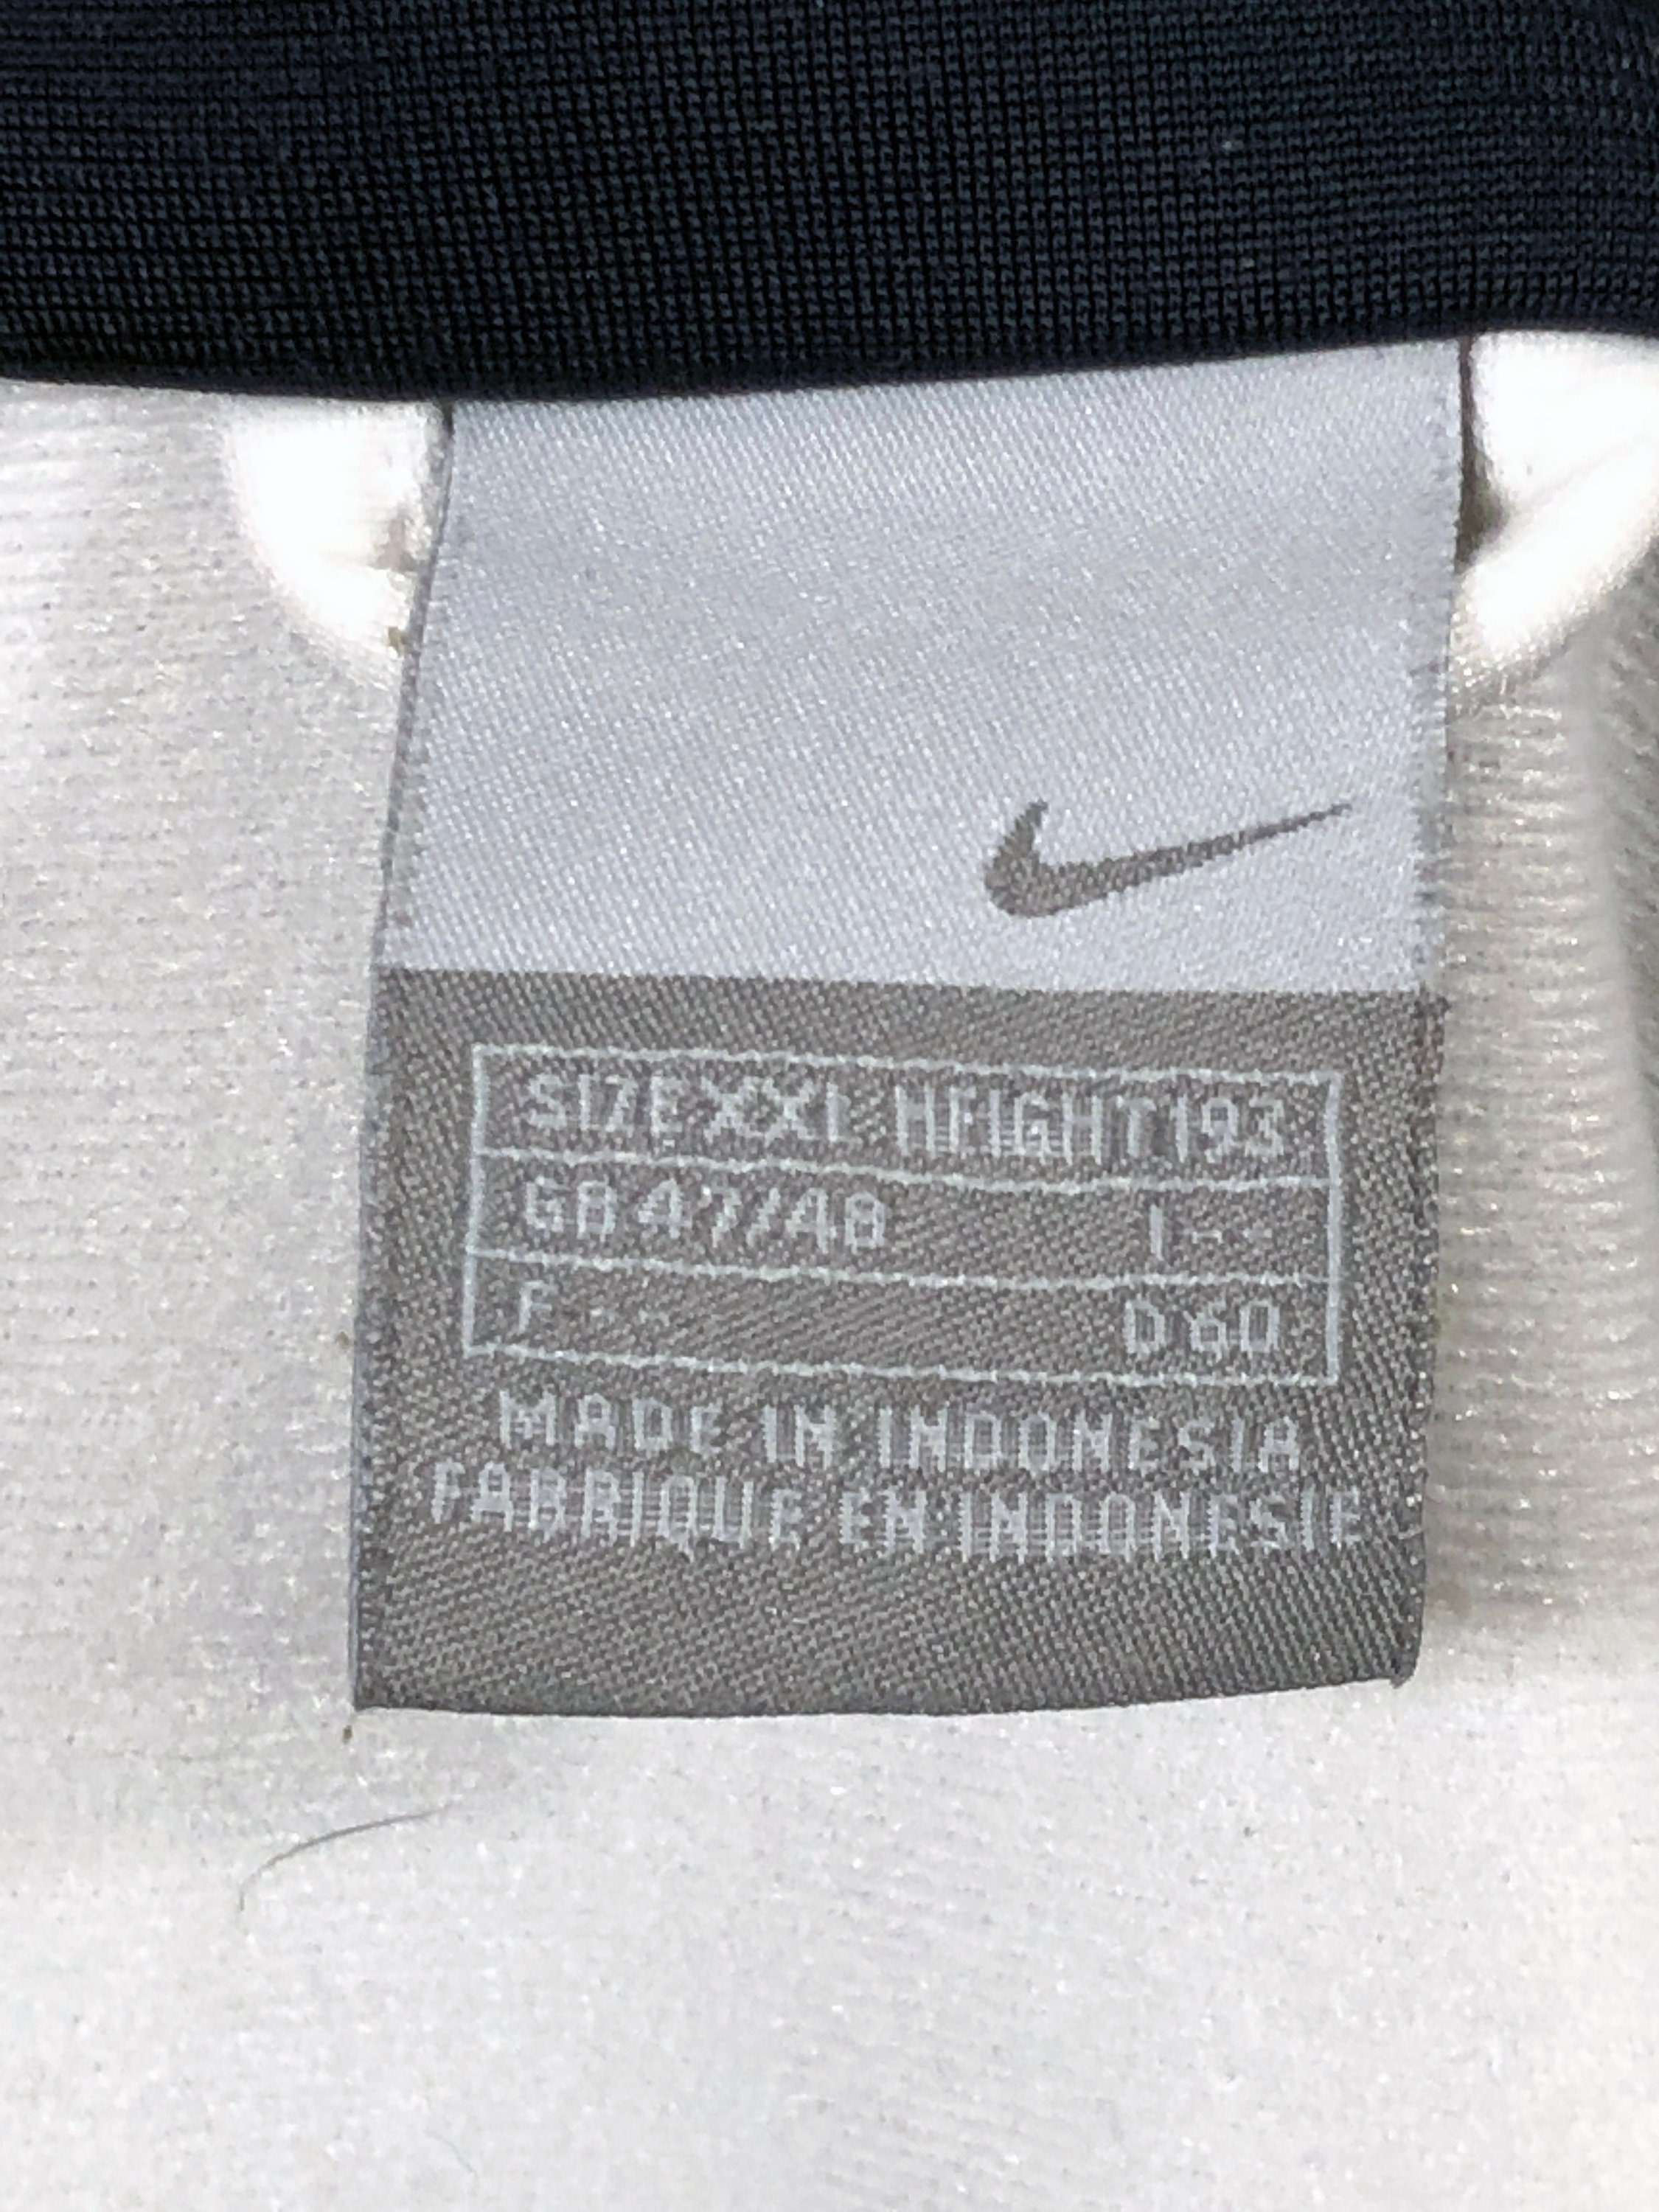 2000s Nike Vintage Men's White and Black Sport Jacket | Etsy